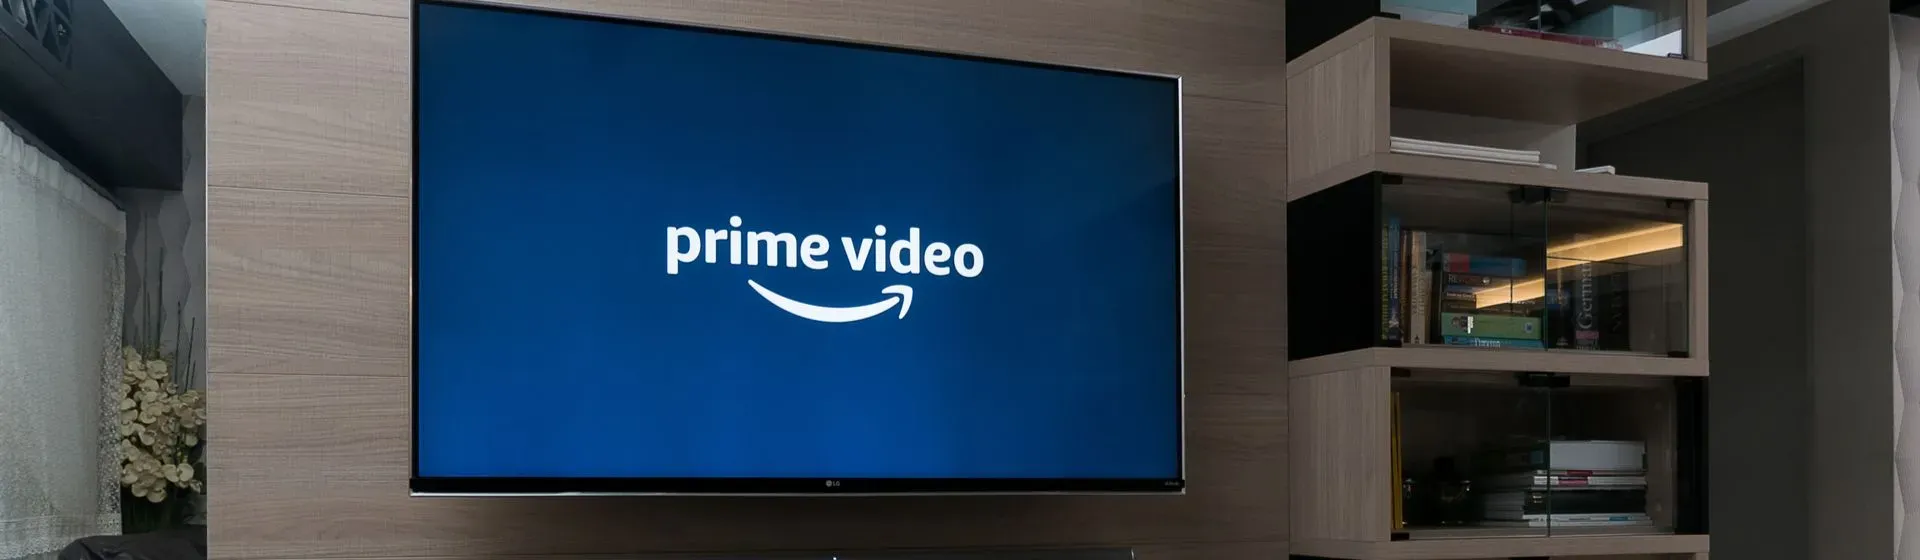 Capa do post: Como assistir Amazon Prime na TV? Confira o passo a passo